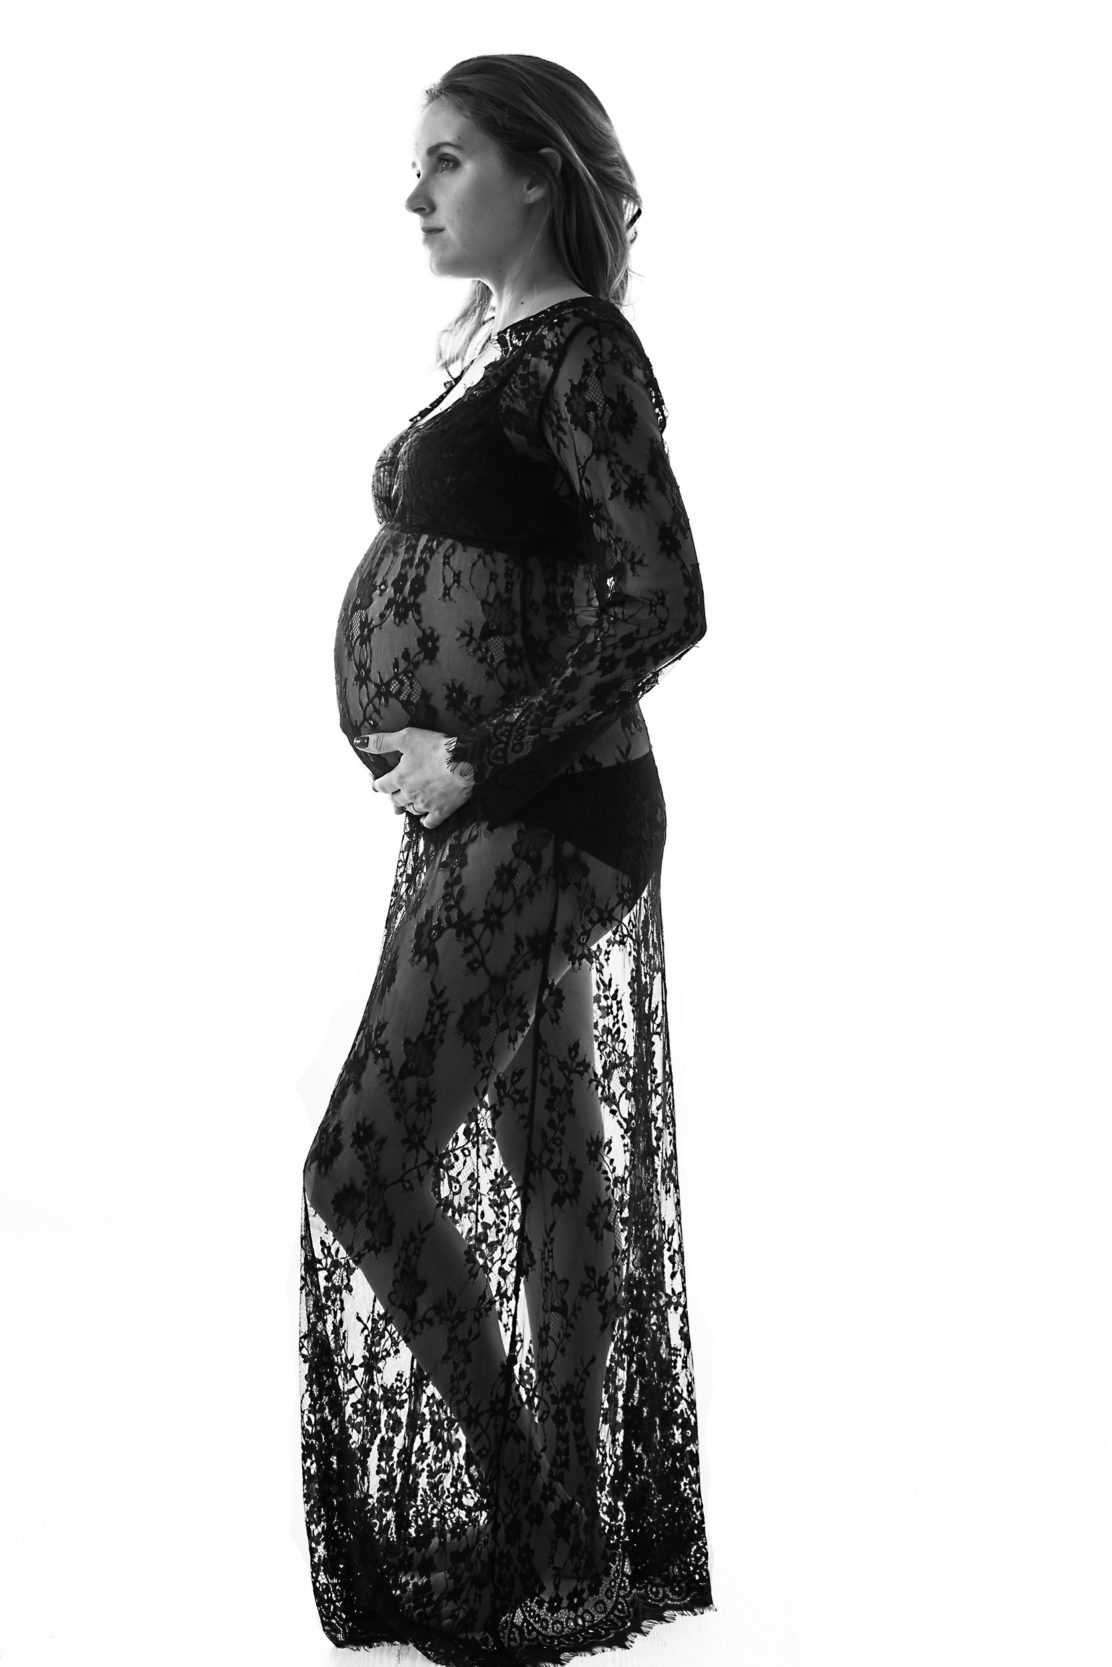 maternity photos photography by portland maternity photographer 012